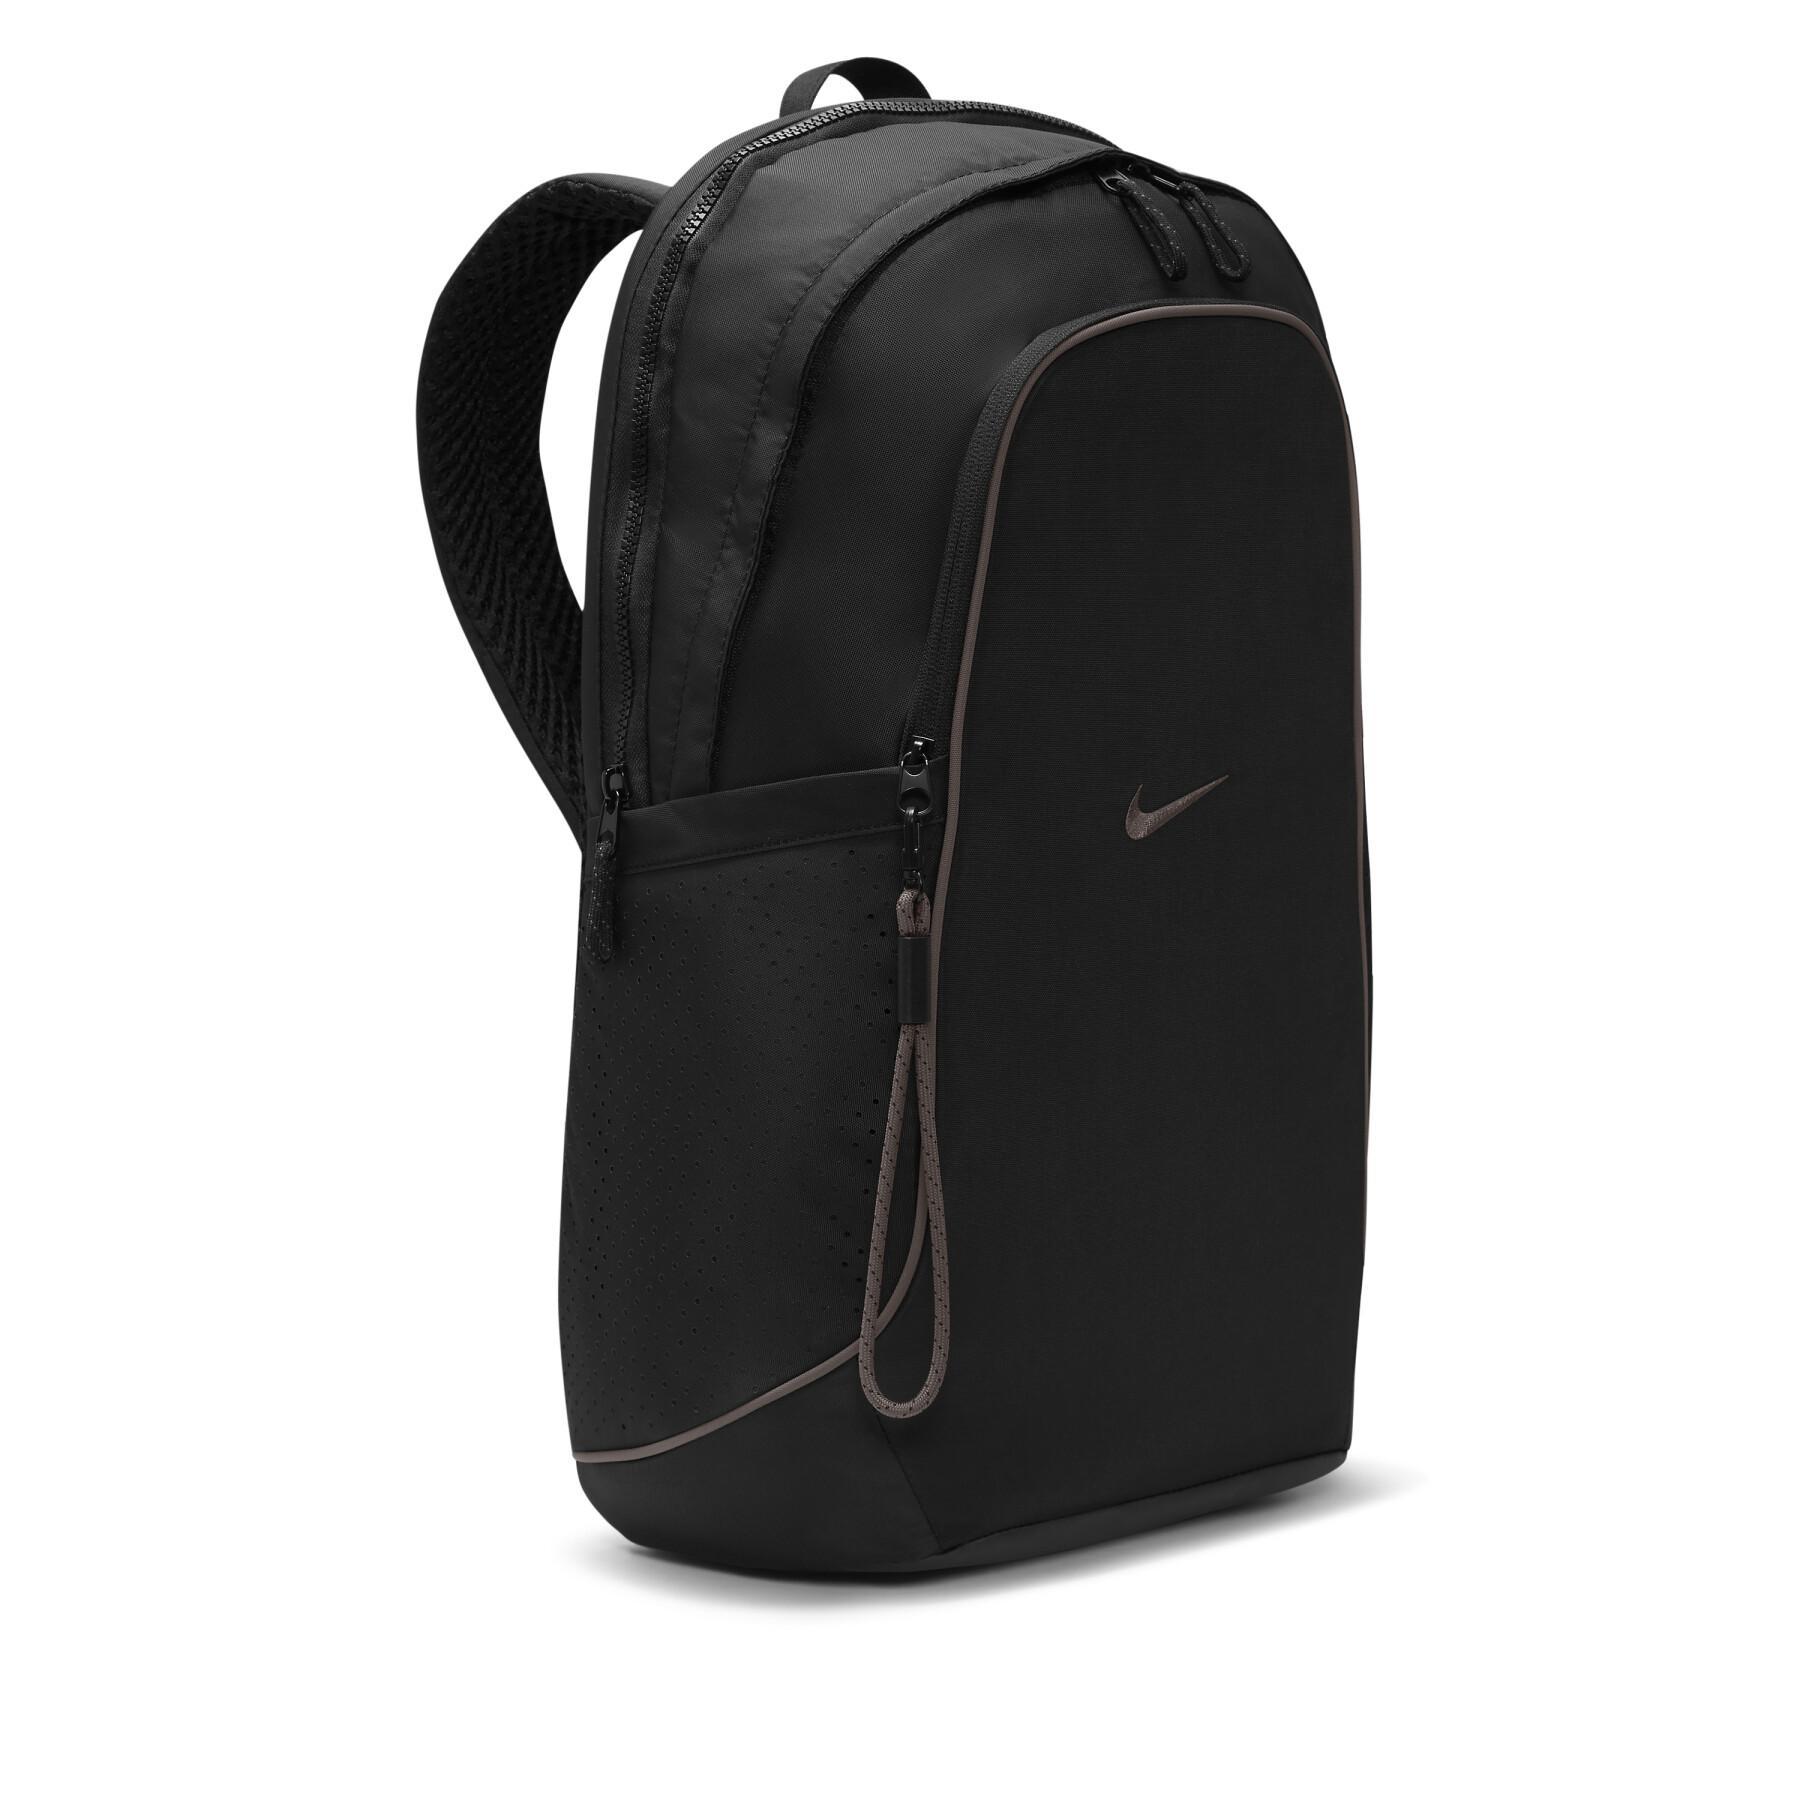 Mochila Nike Sportswear Essentials